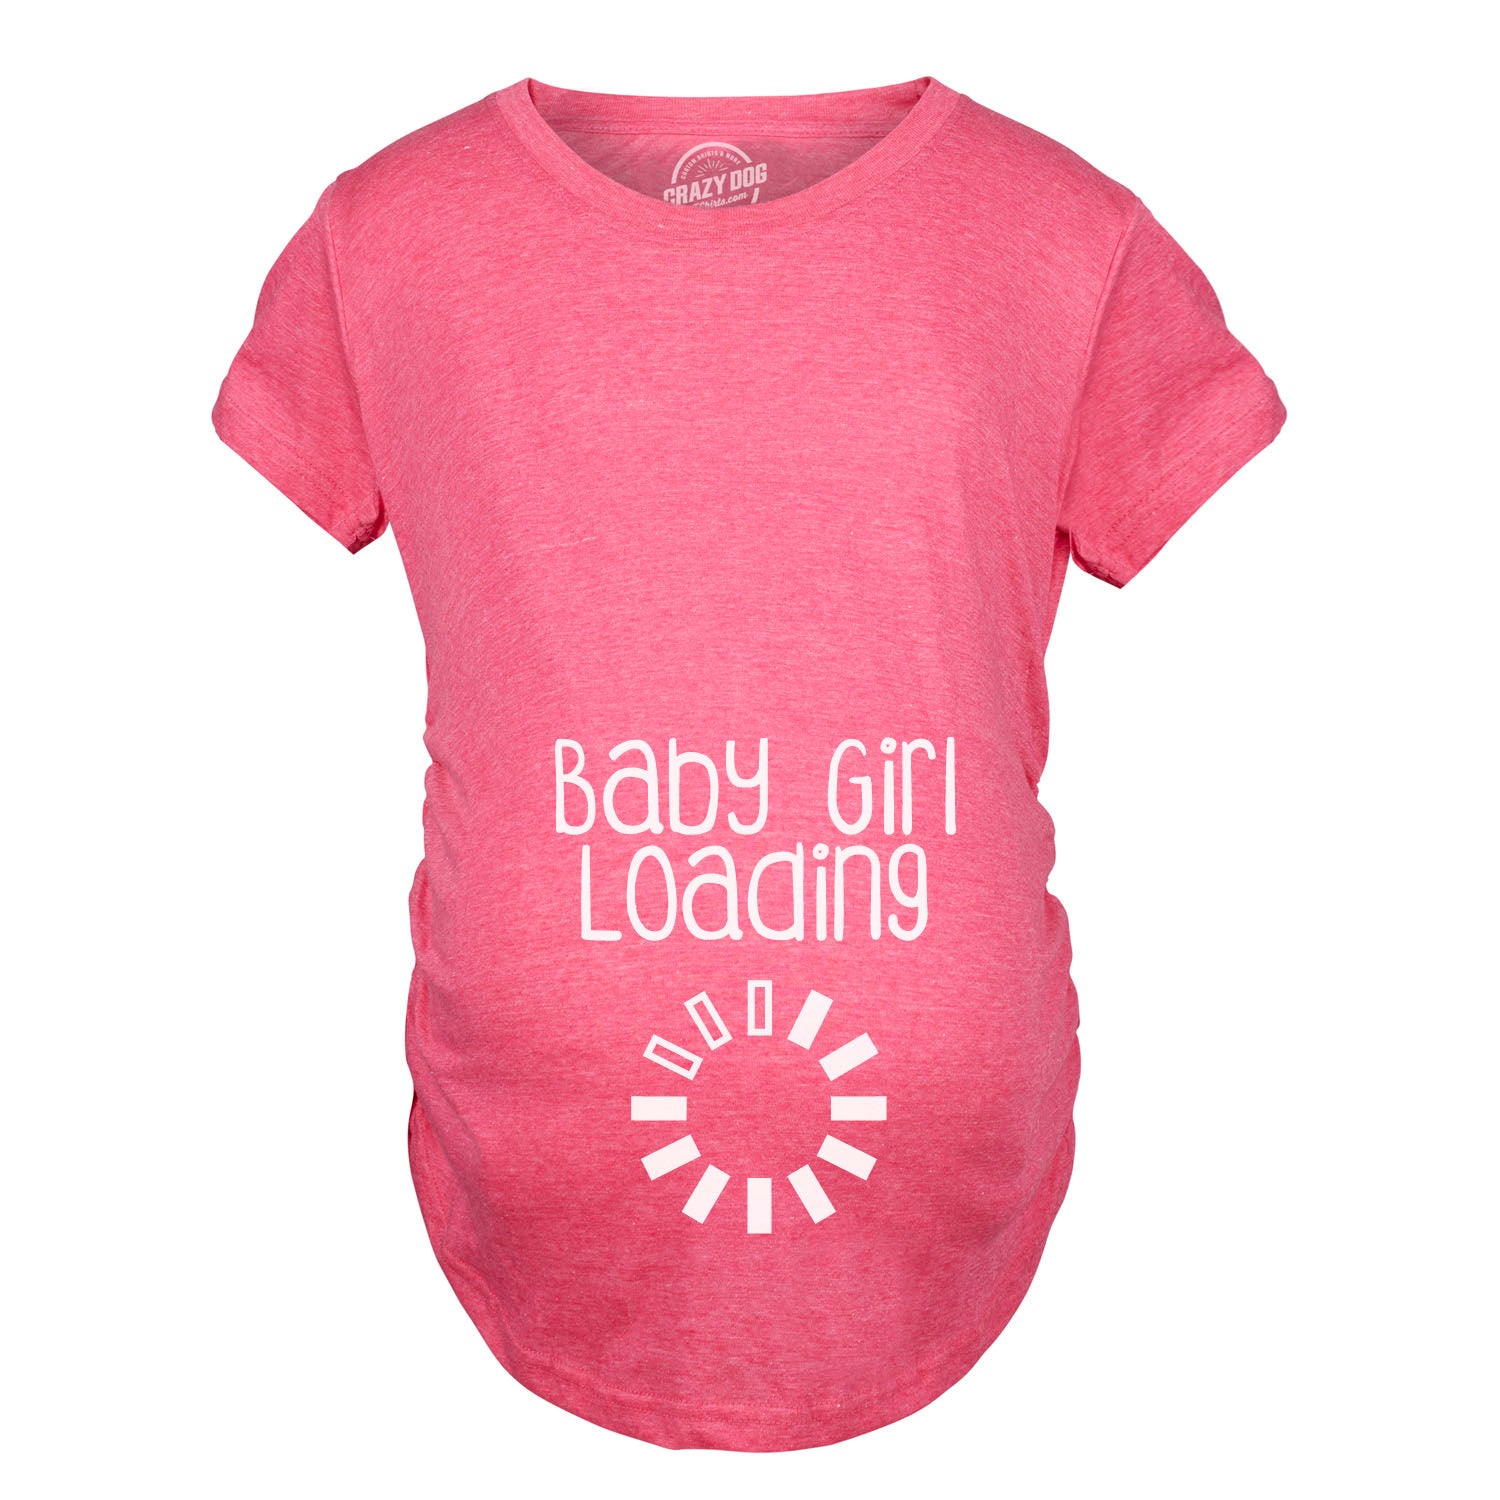 Funny Baby Girl Loading Maternity T Shirt Nerdy nerdy Tee